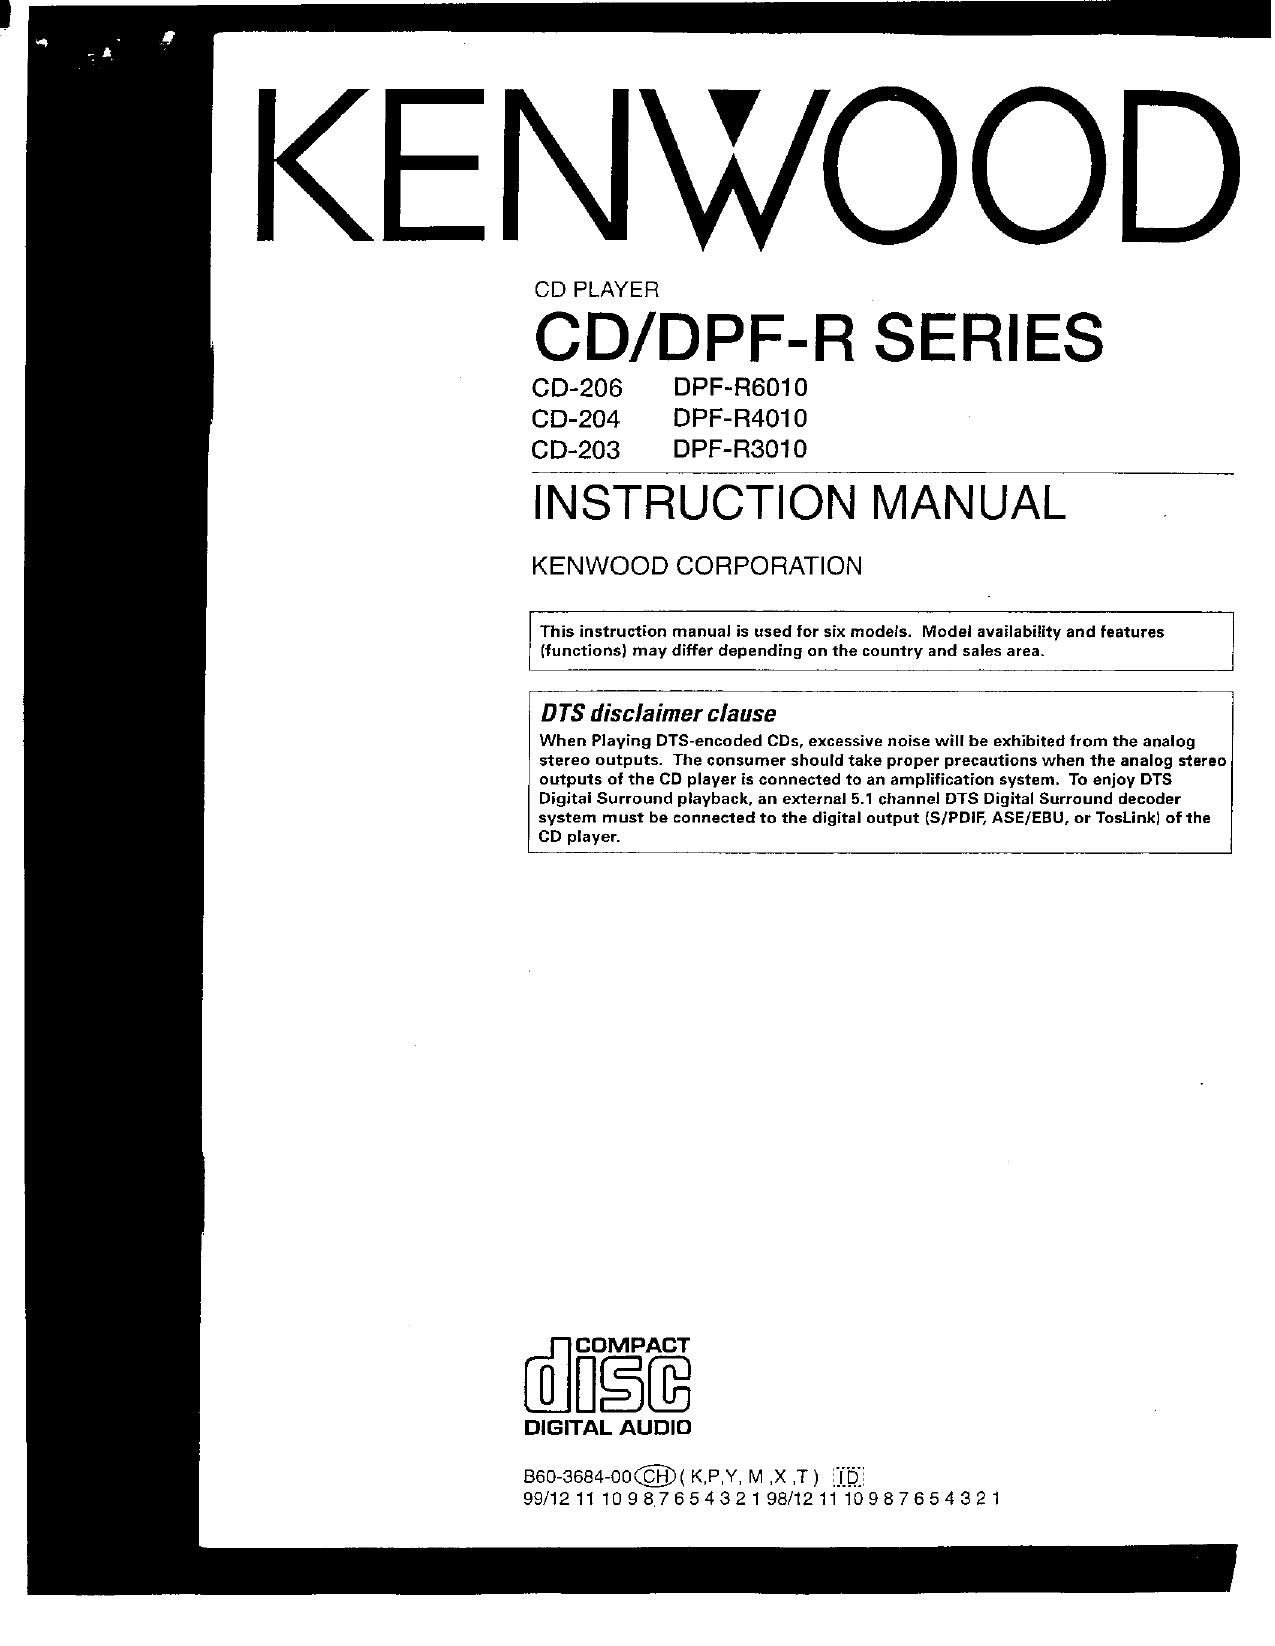 Kenwood CD 206 Owners Manual